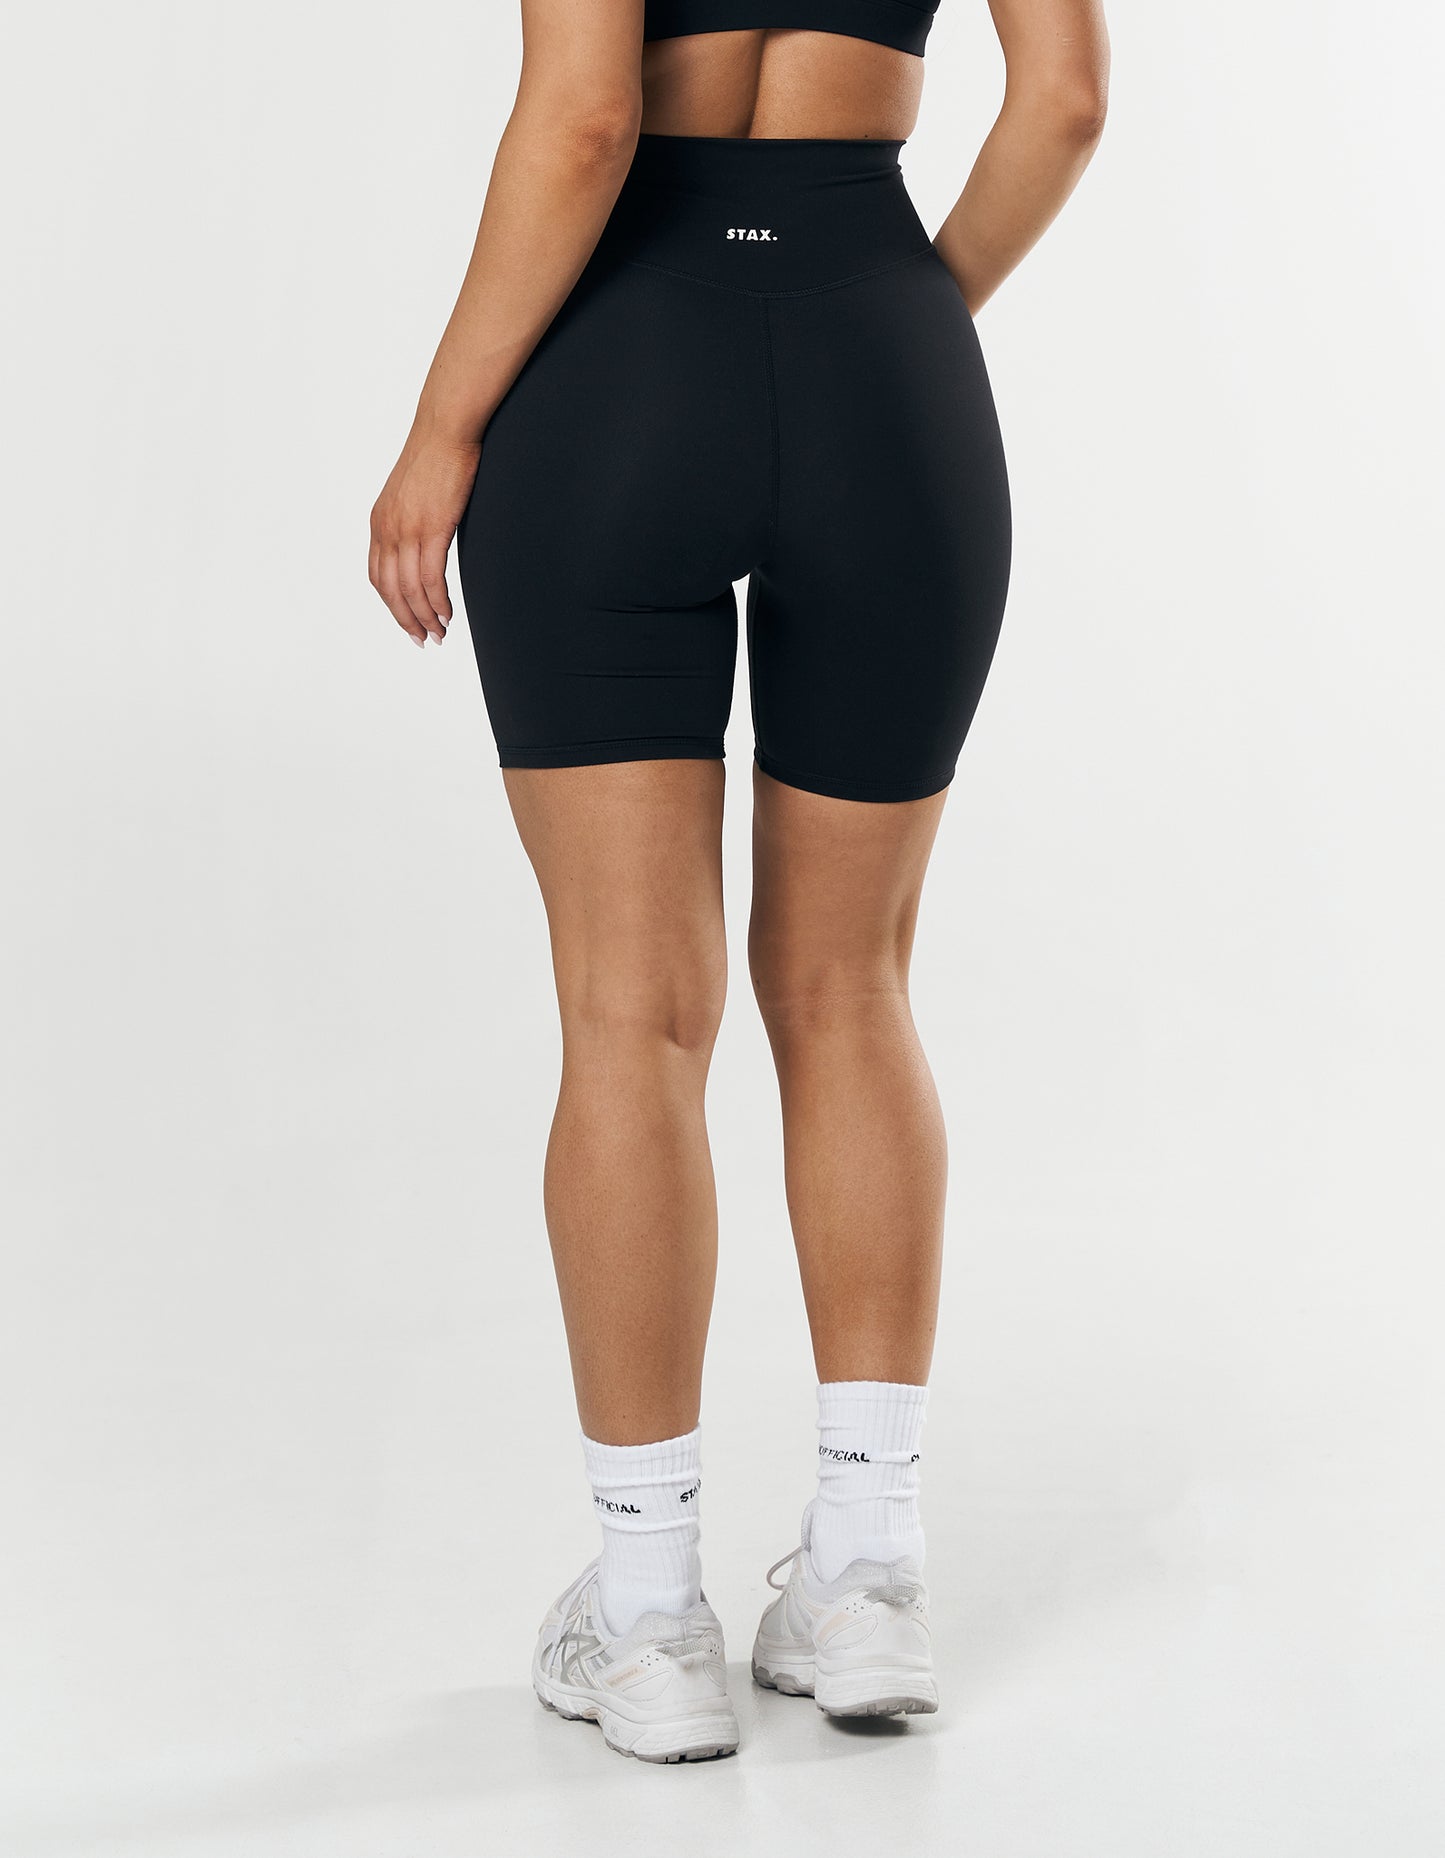 STAX. Original Bike Shorts NANDEX ™ - Black